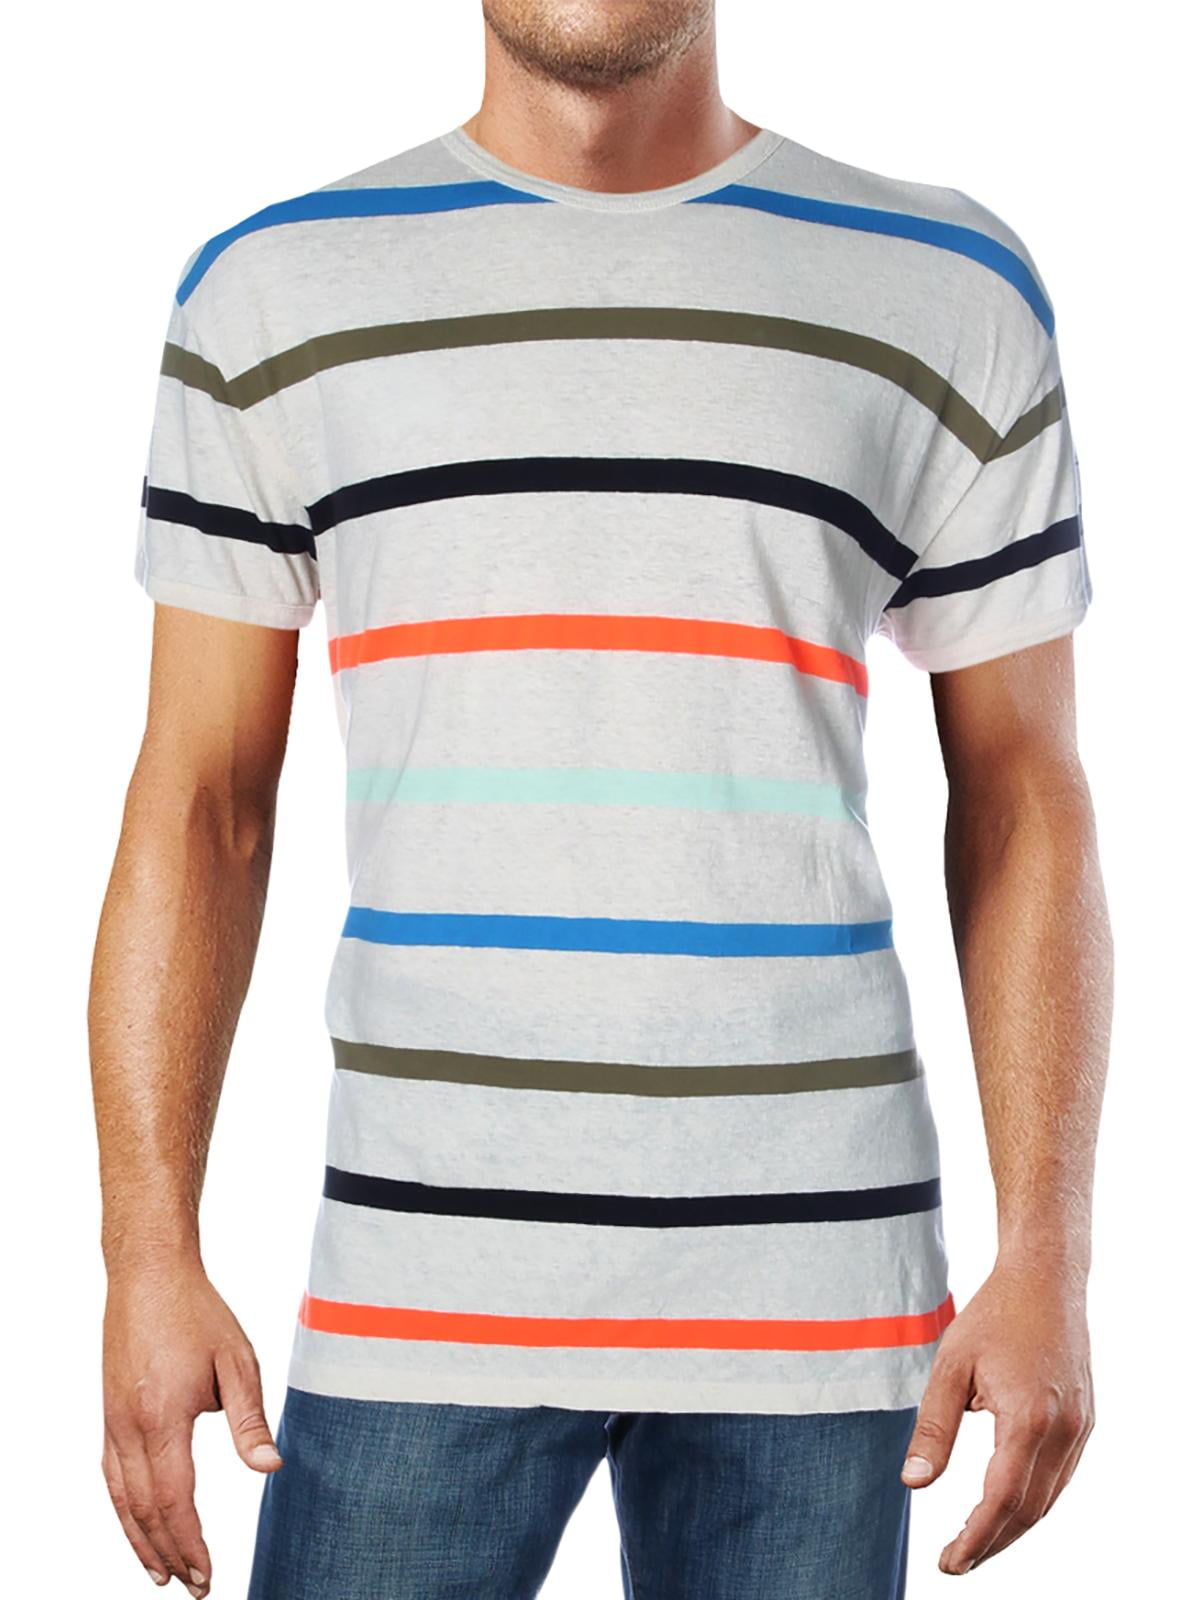 Spole tilbage Ciro Sømil Scotch & Soda Mens Linen Blend Striped T-Shirt - Walmart.com